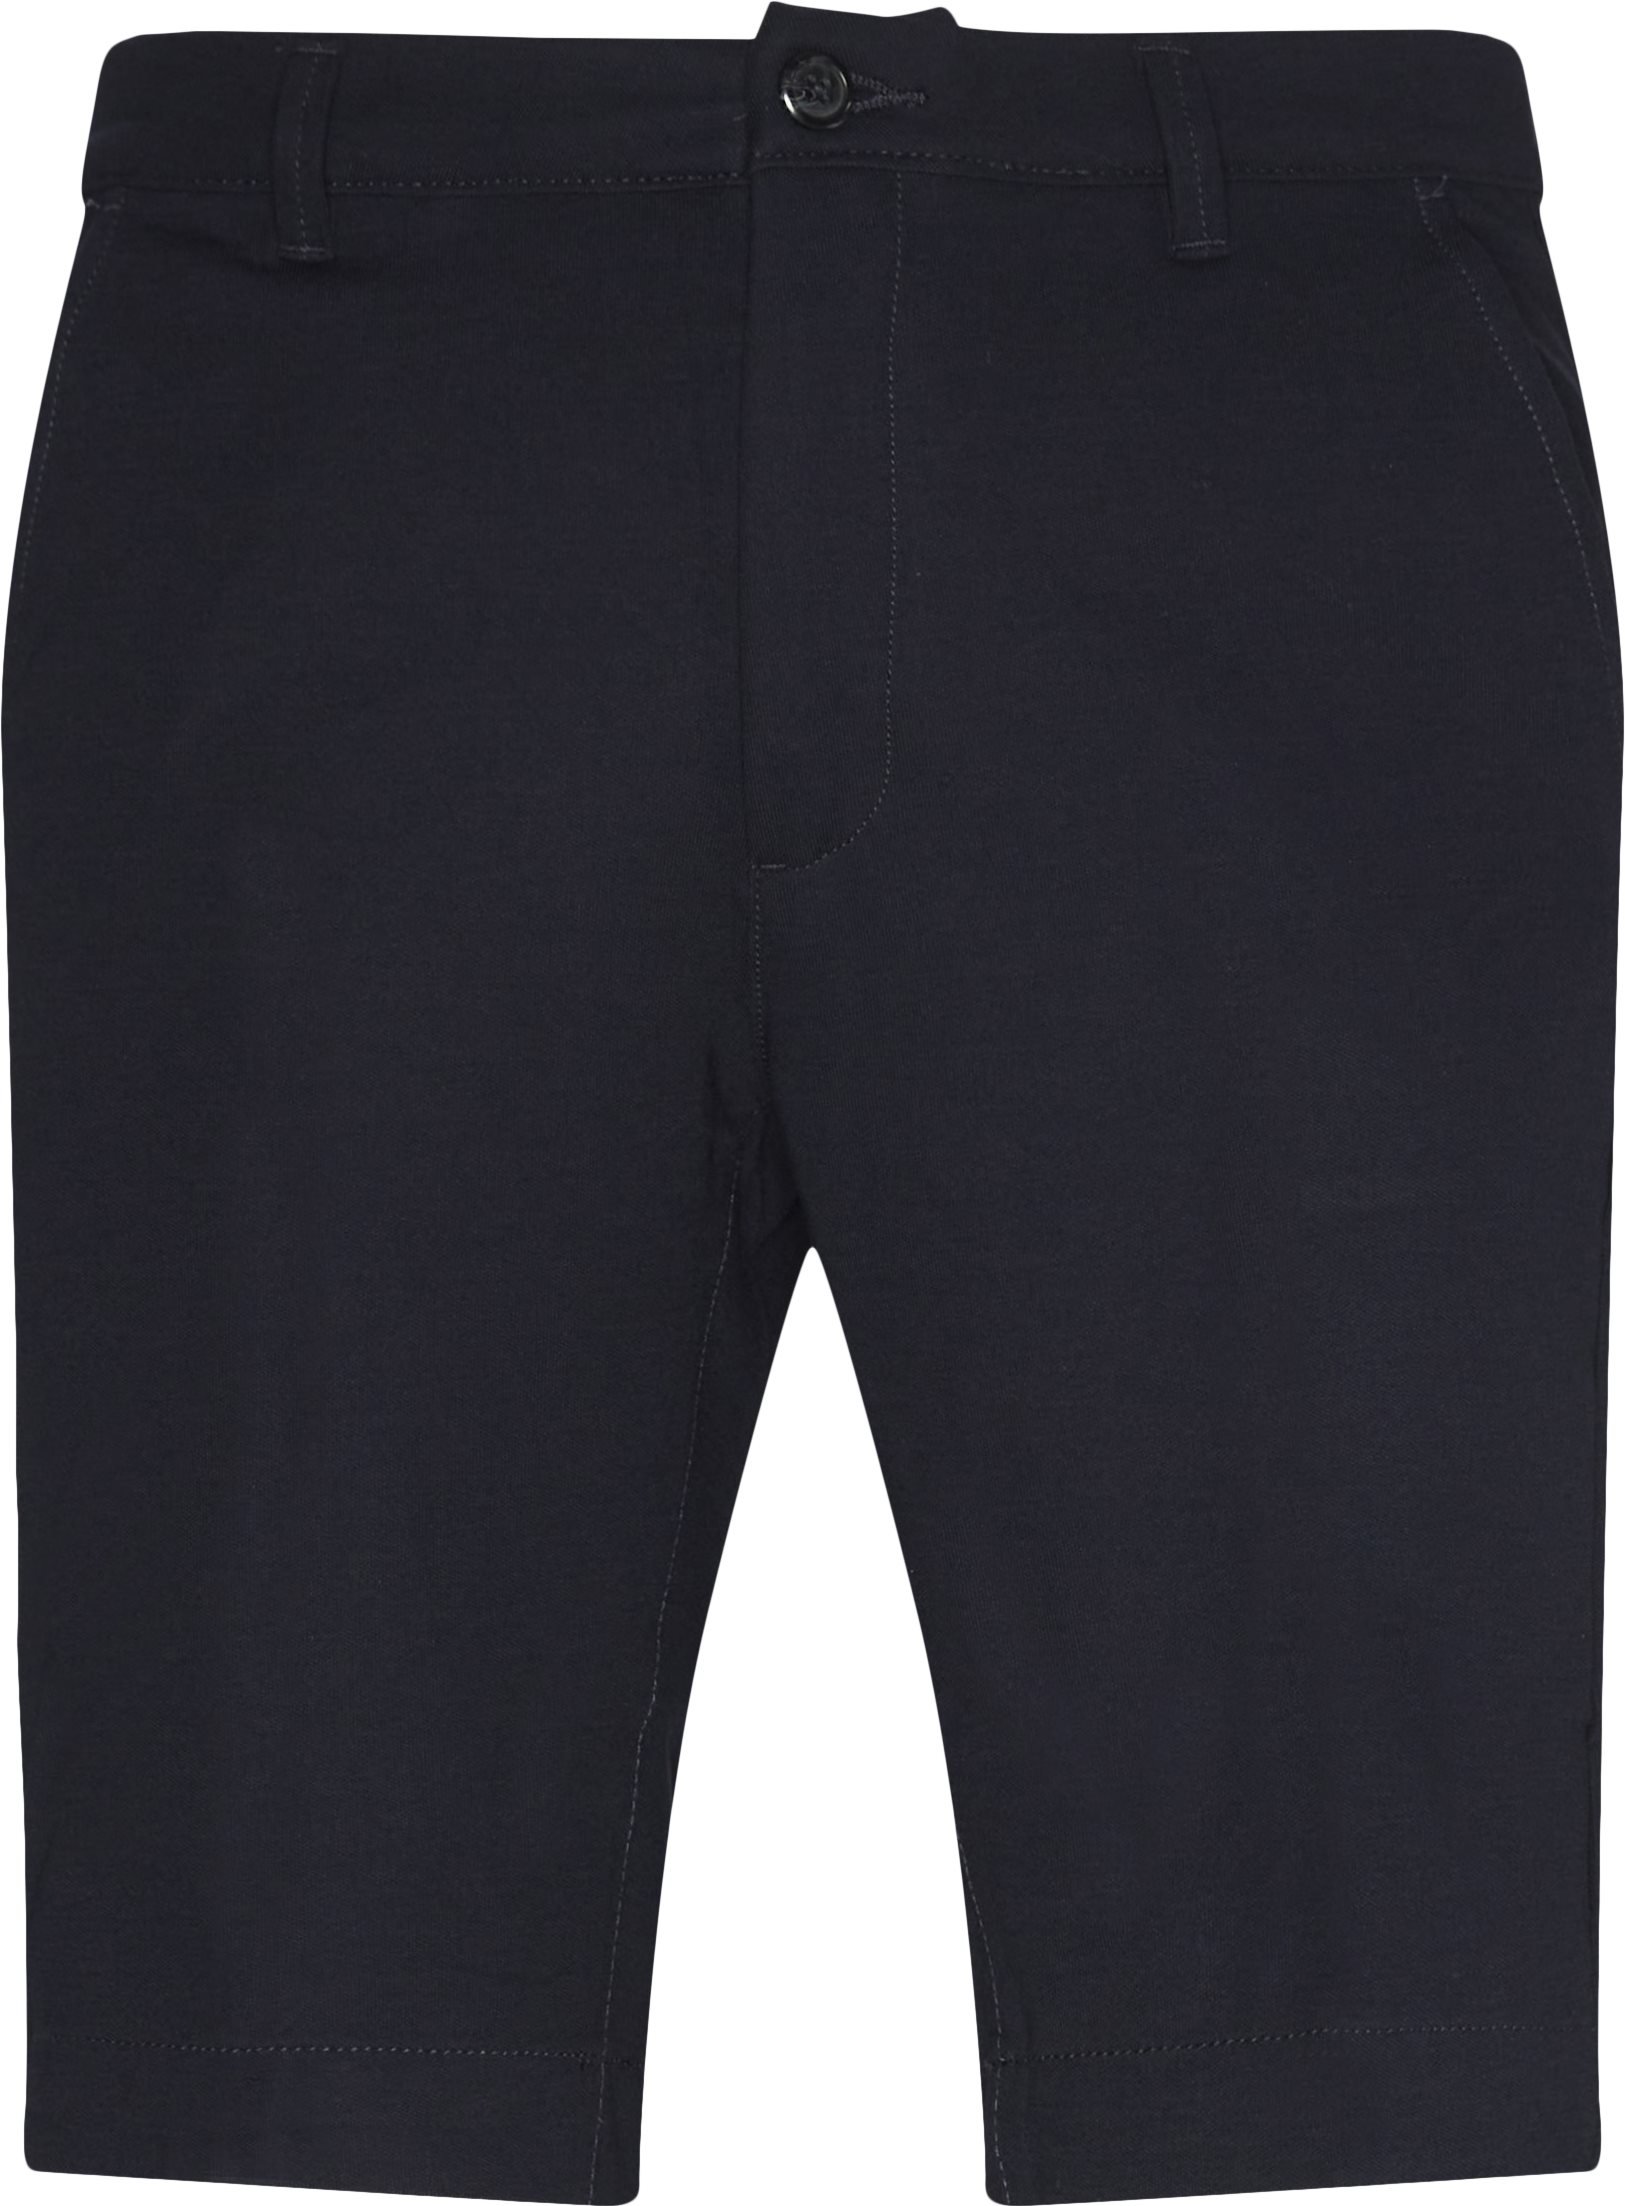 Florin shorts - Shorts - Regular fit - Blå